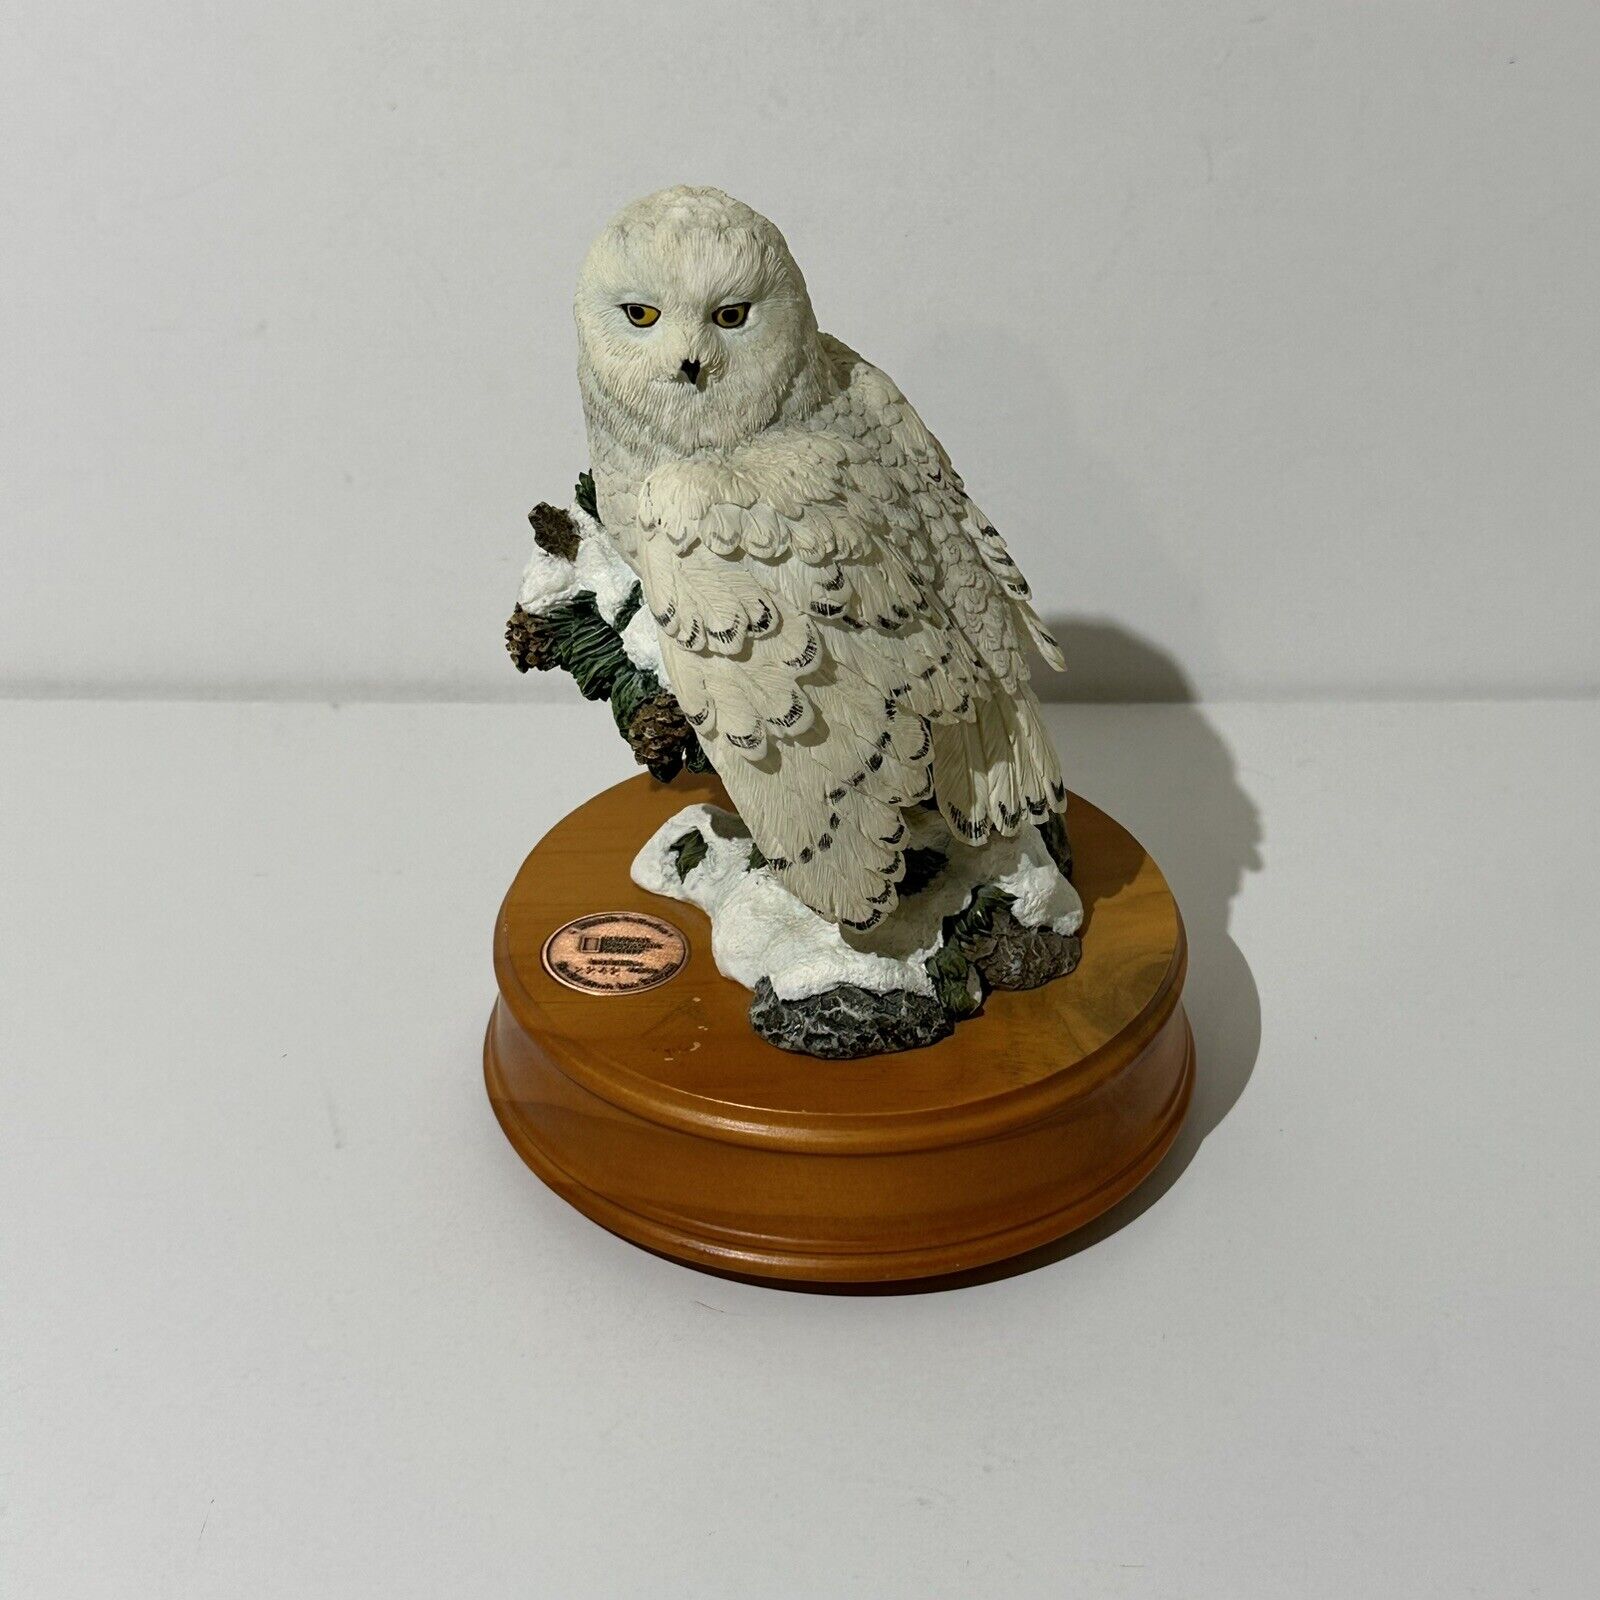 San Francisco Music Box Co. National Geographic Snowy Owl plays Moonlight Sonata